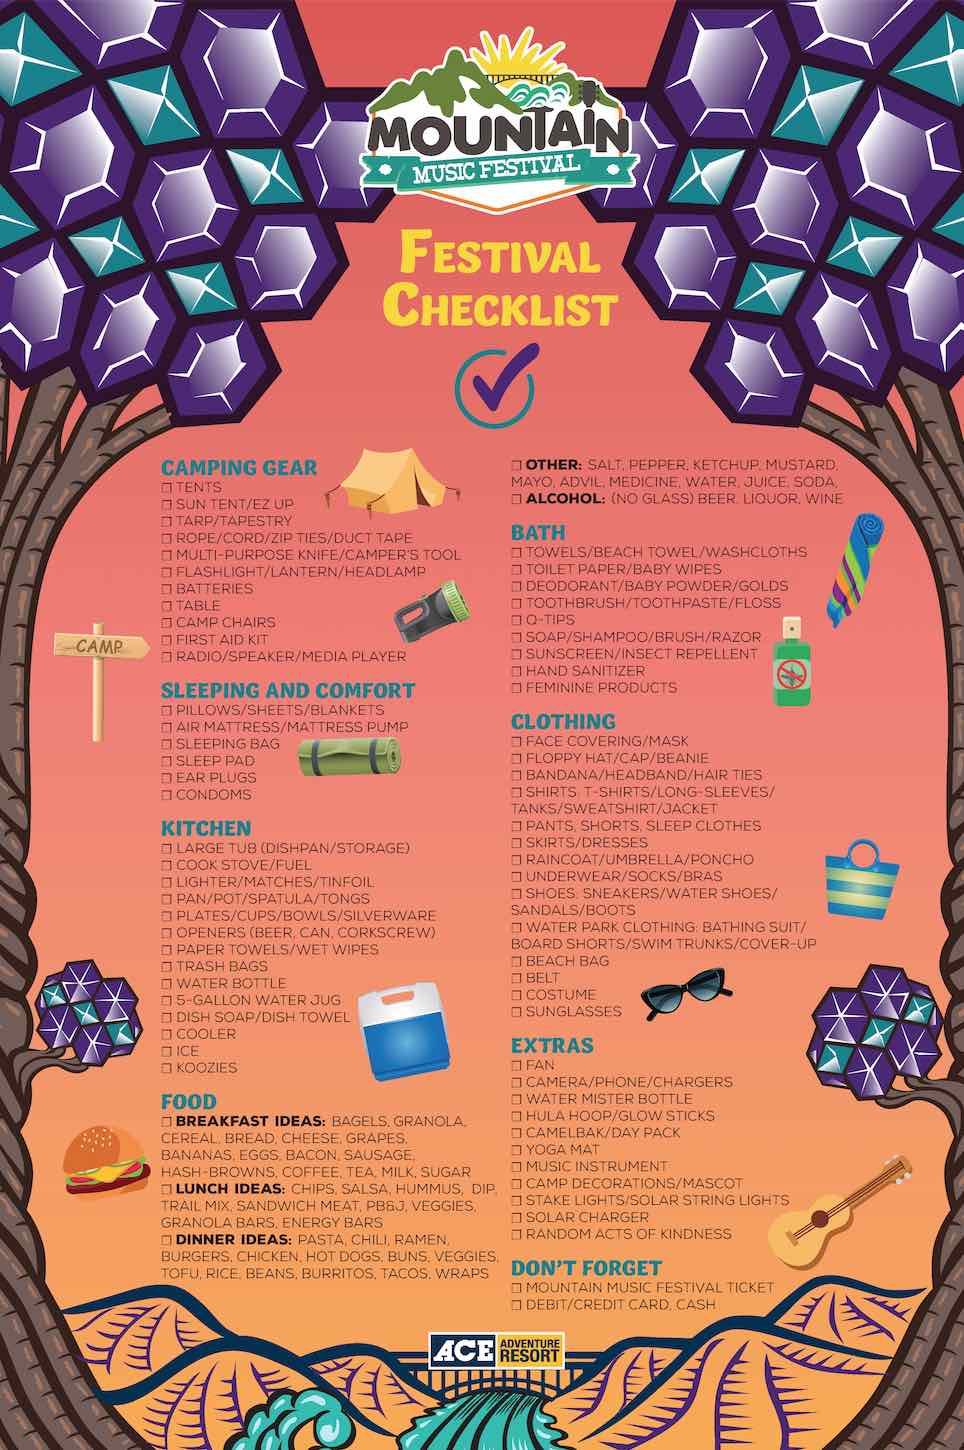 What to bring checklist